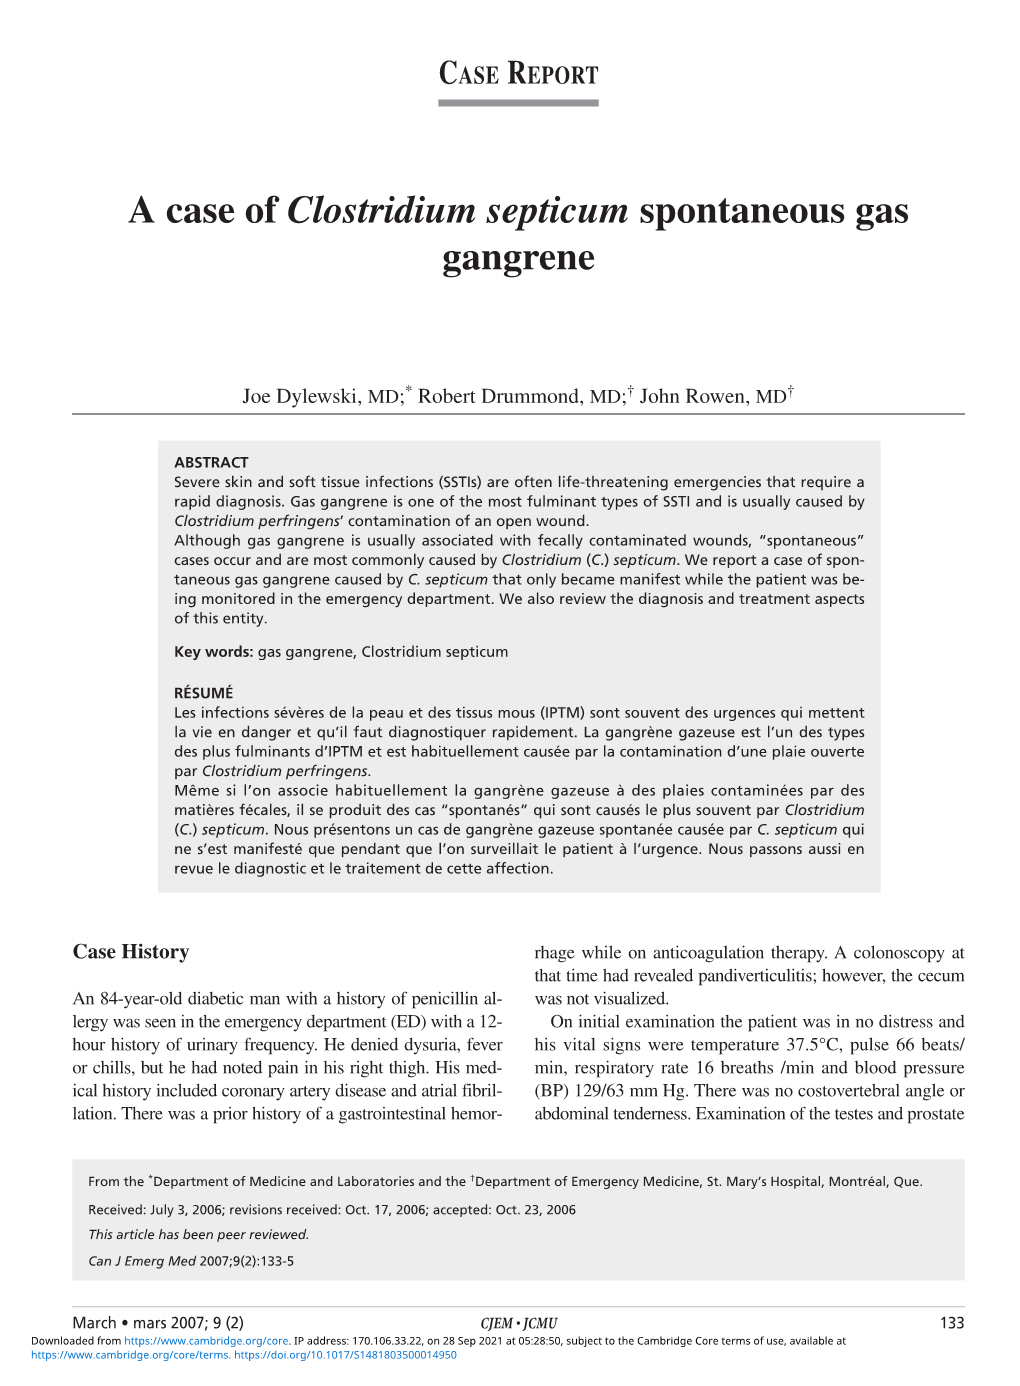 A Case of Clostridium Septicum Spontaneous Gas Gangrene